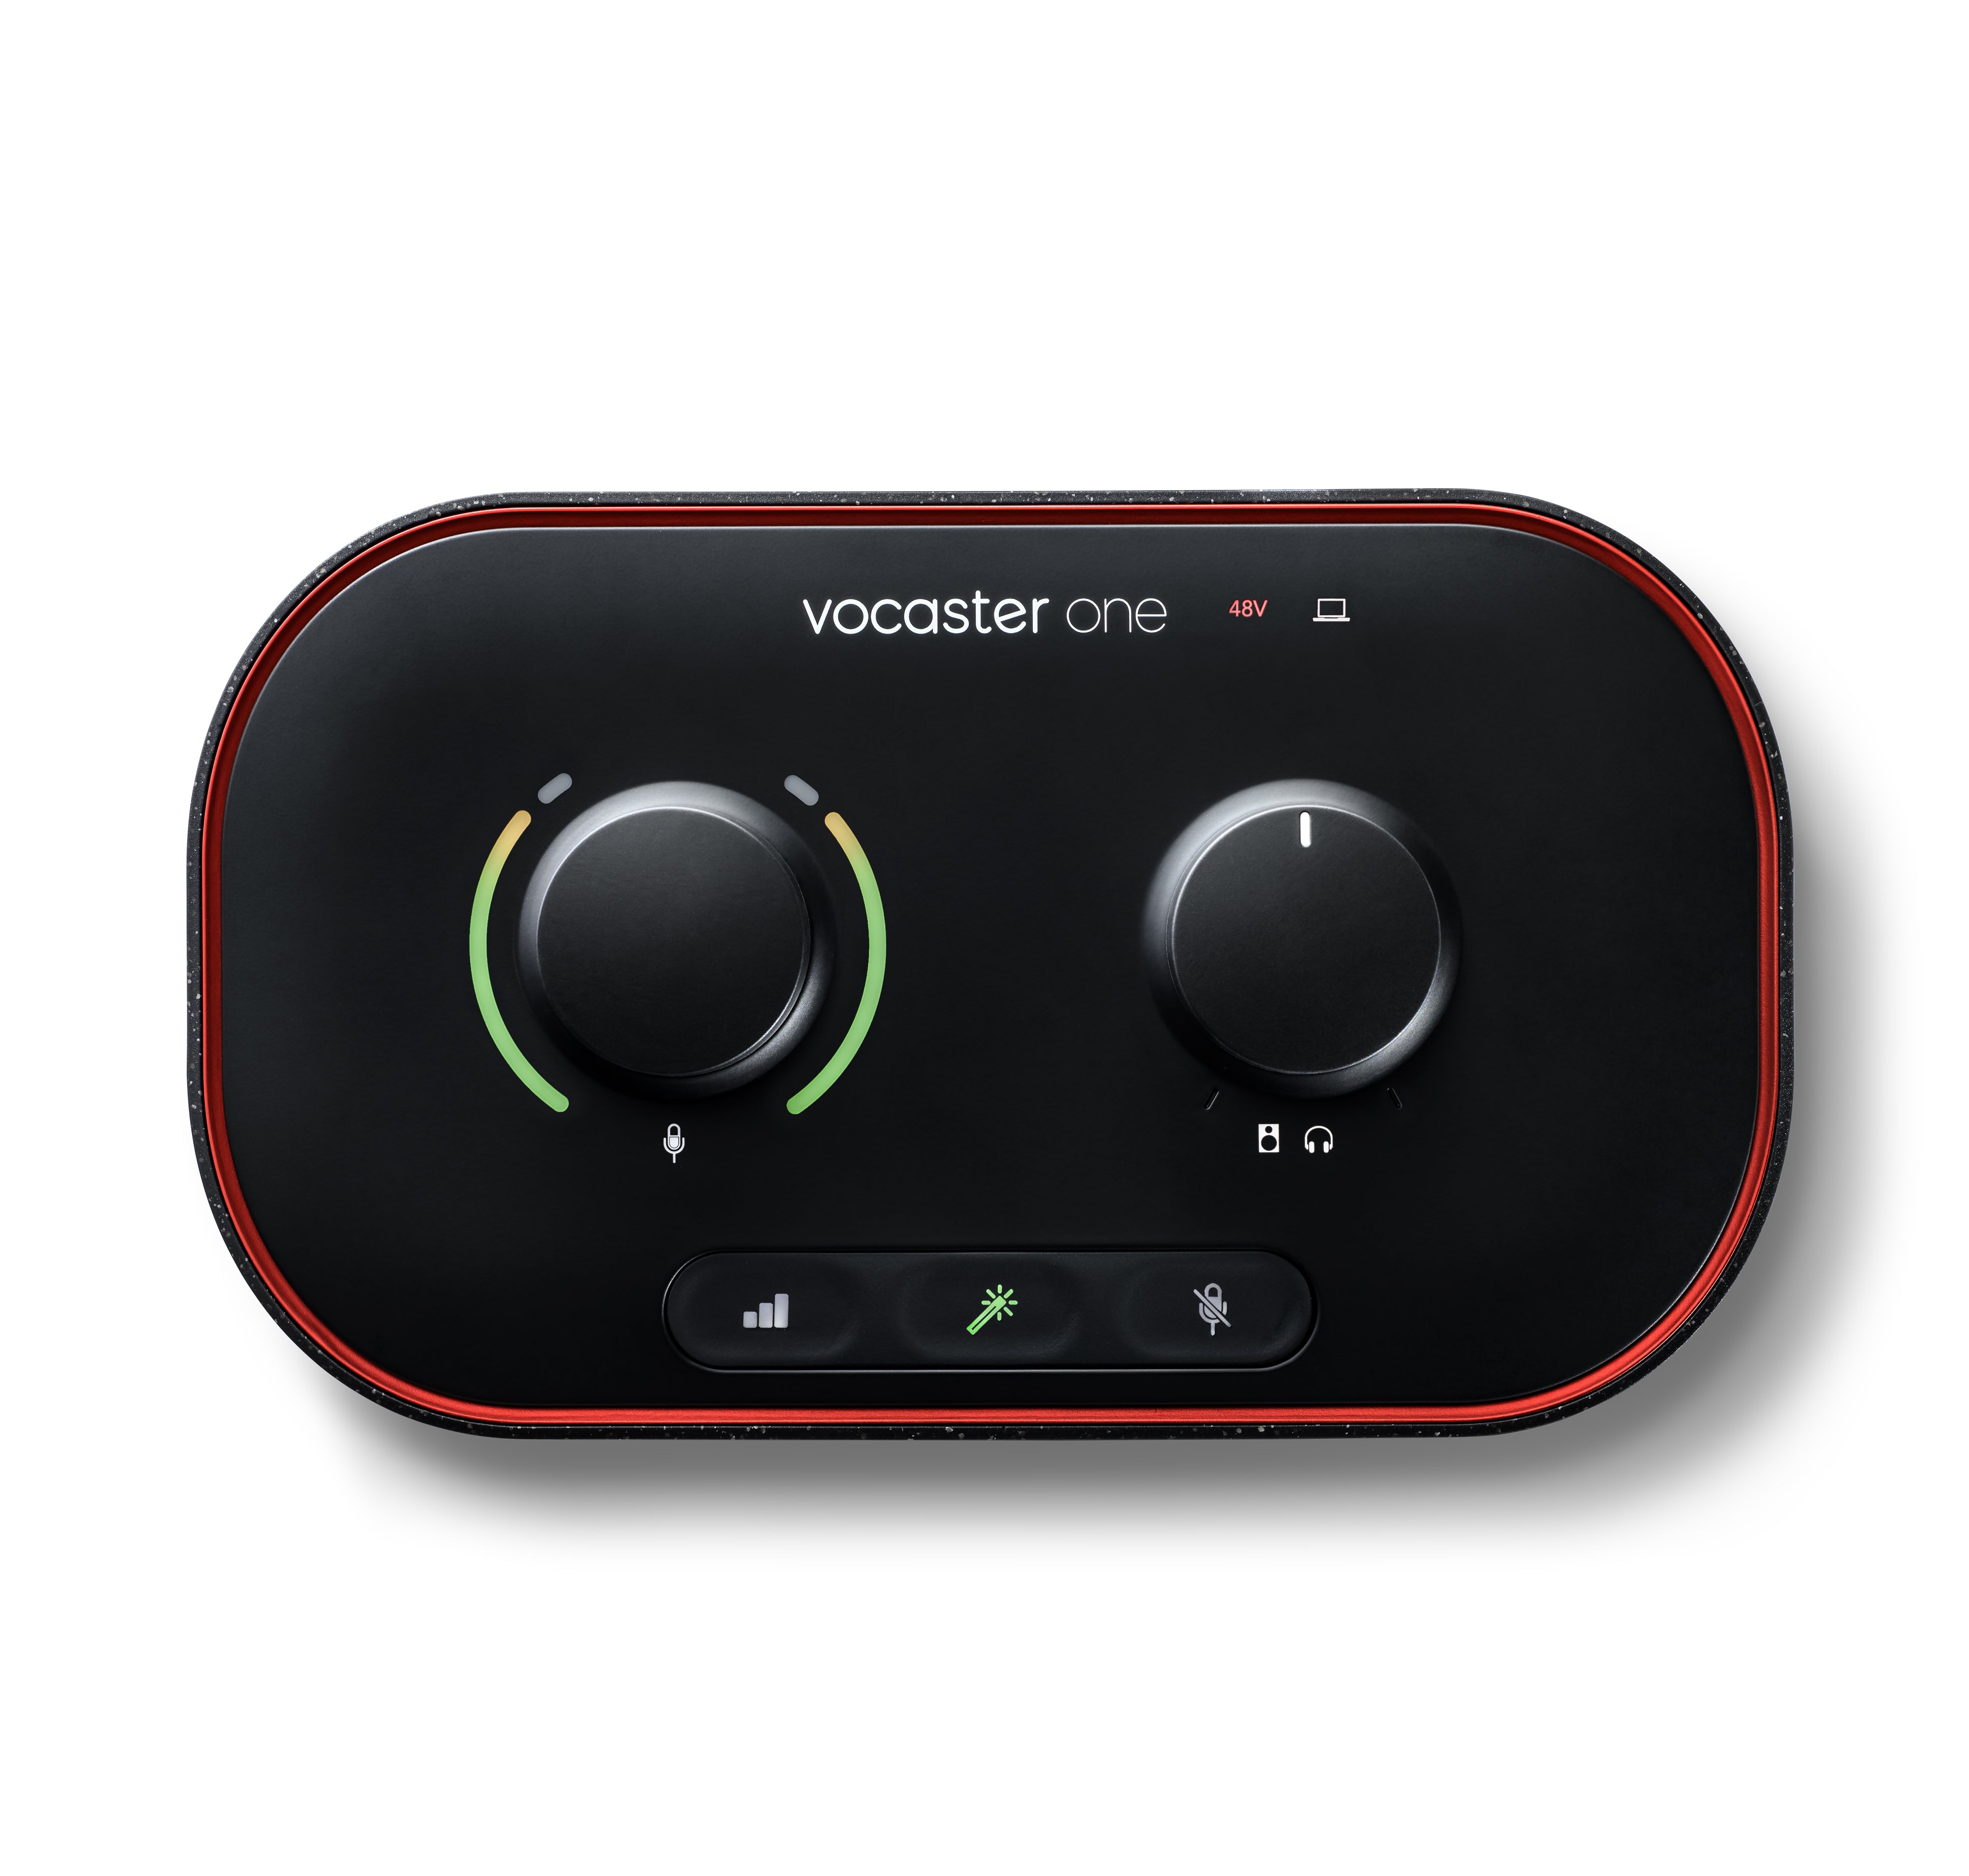 Focusrite Vocaster One - The Podcast Interface for Solo Content Creators